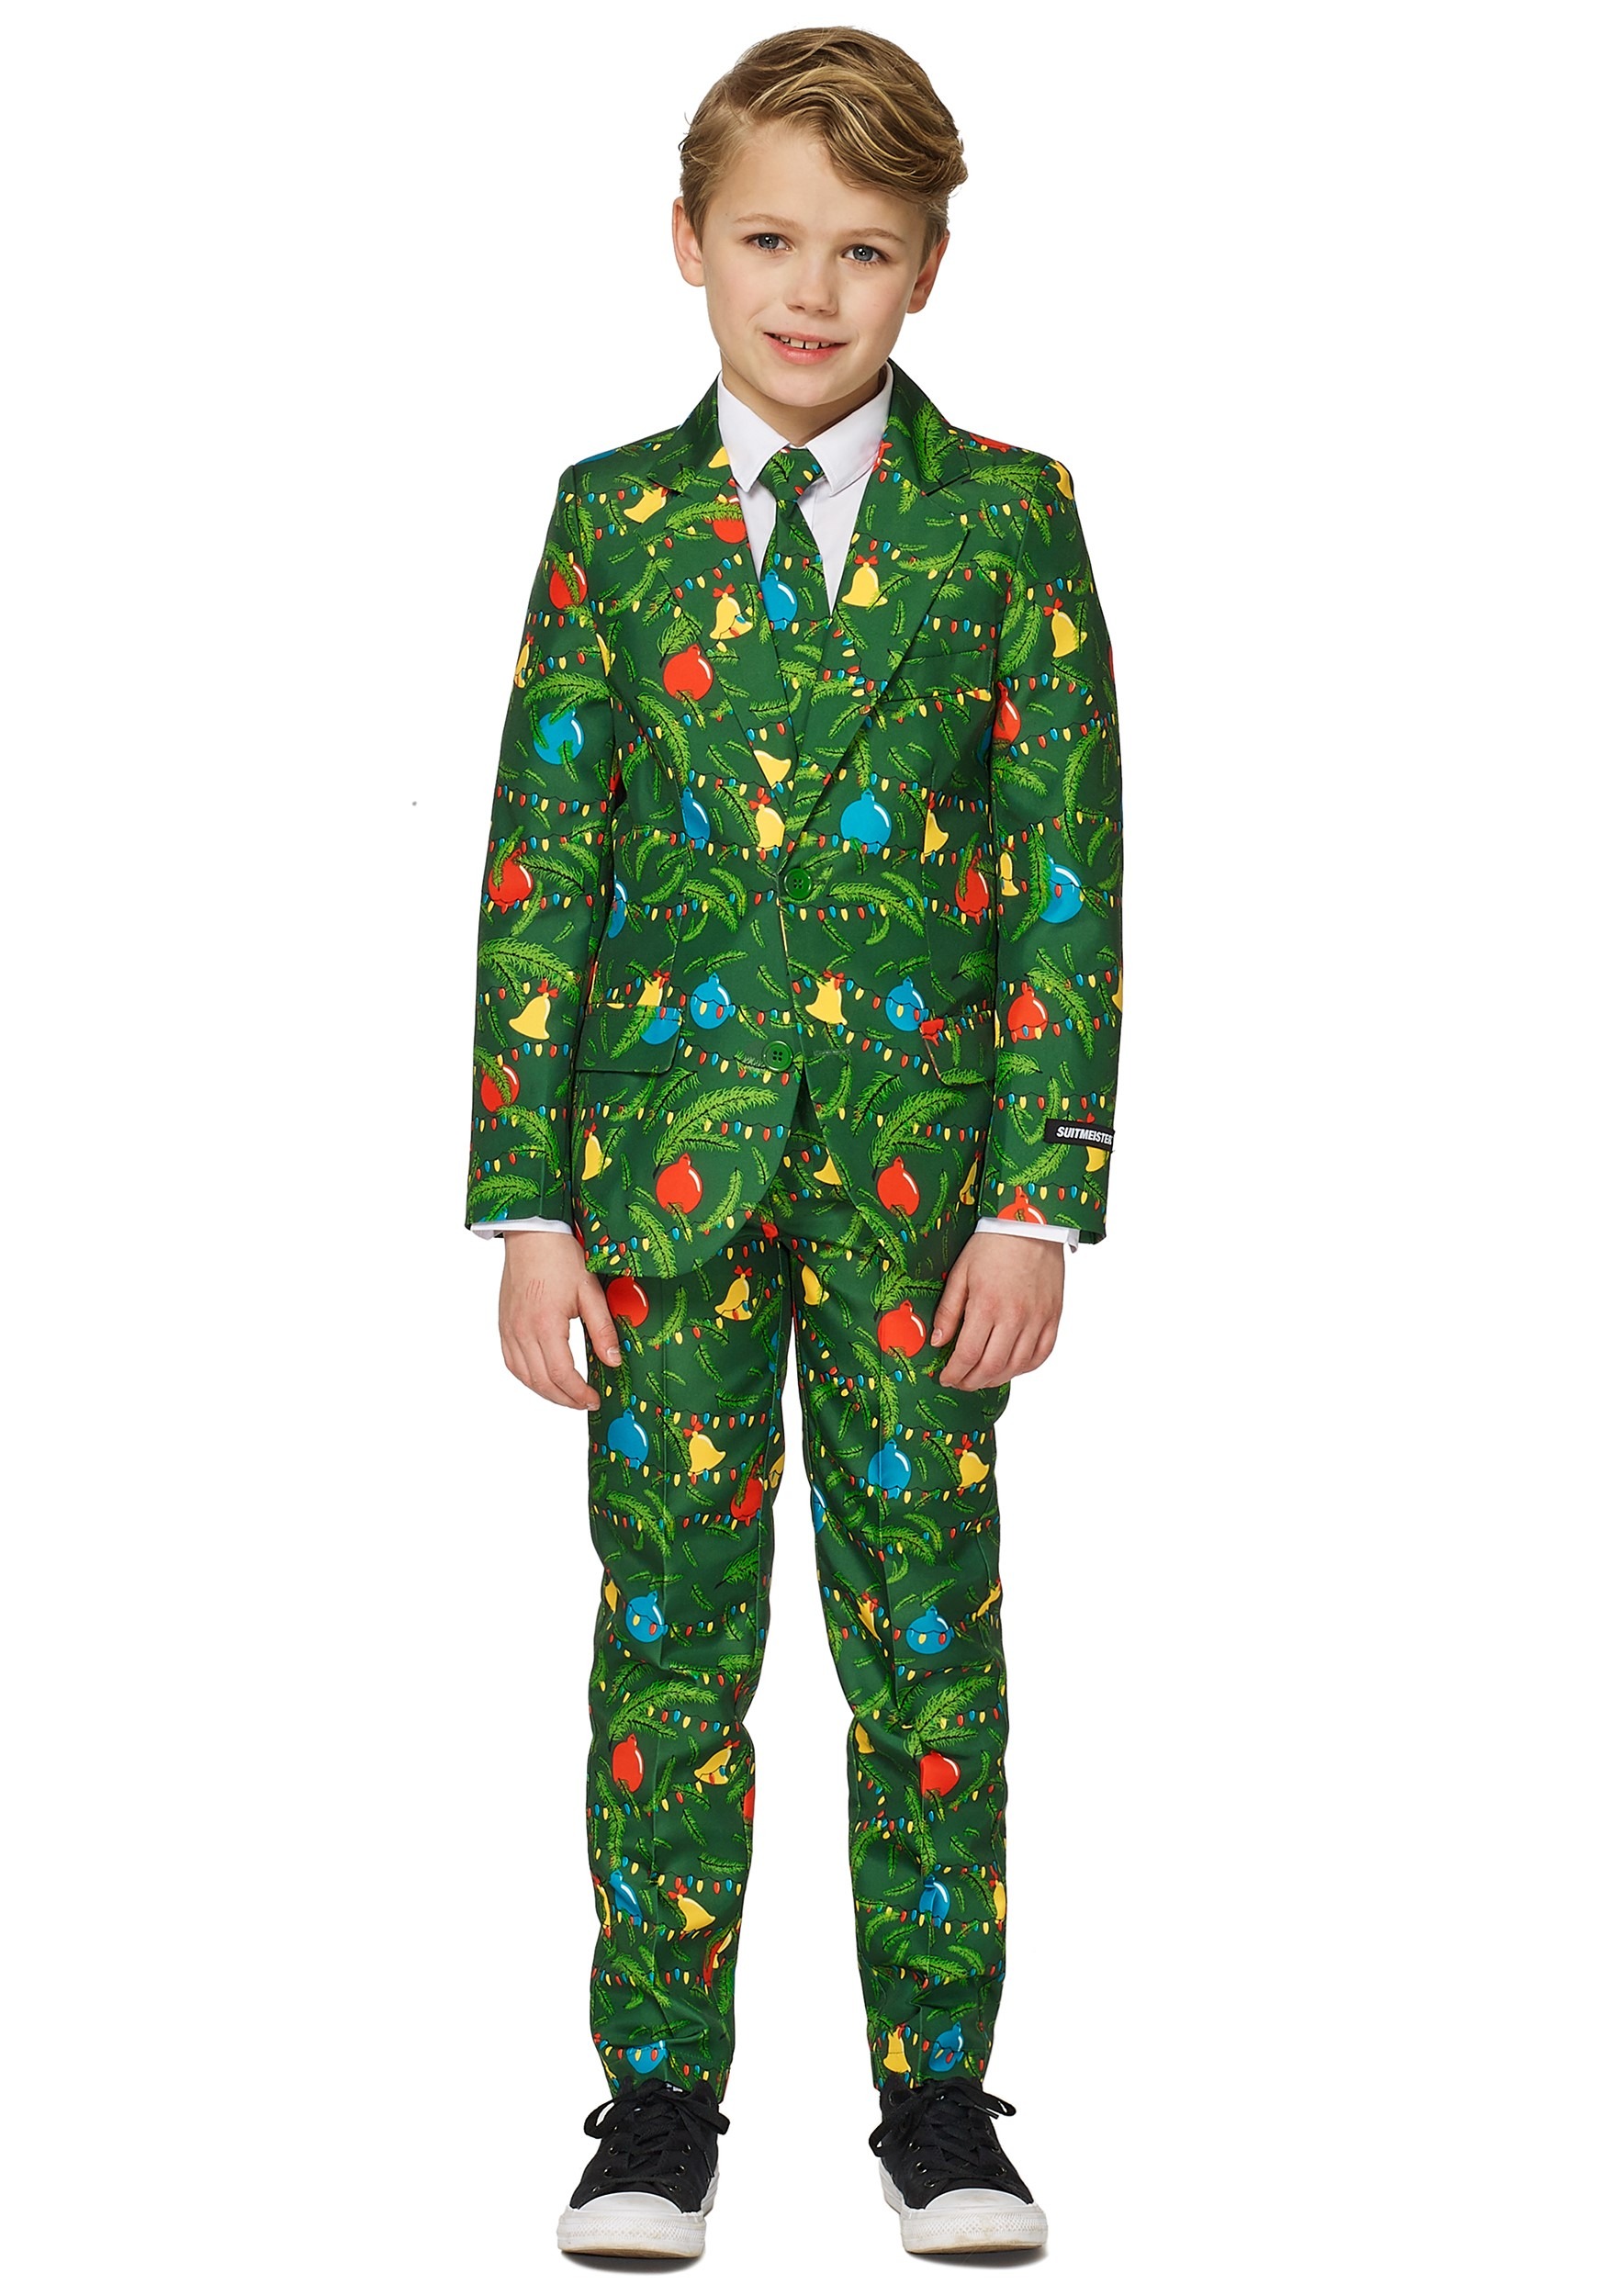 Green Christmas Tree Light Up Boys Suit